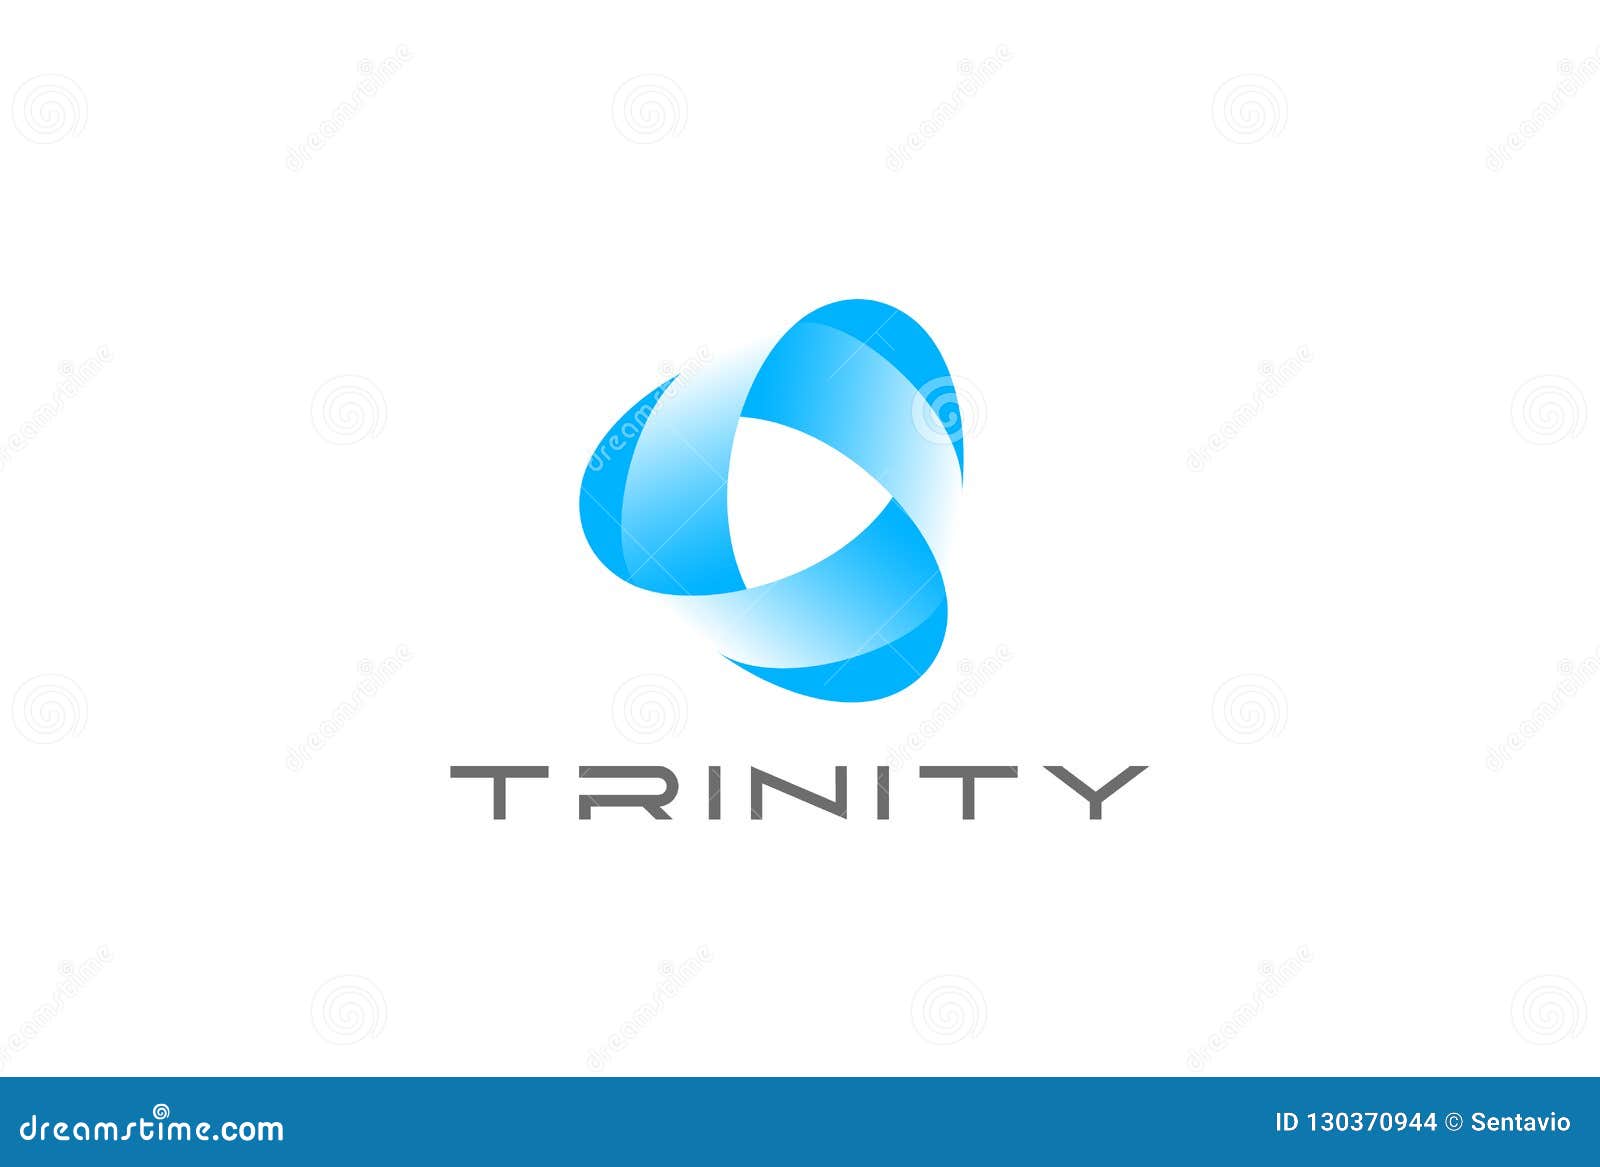 Triangle Infinity Loop Ribbon Logo Design Vector Stock